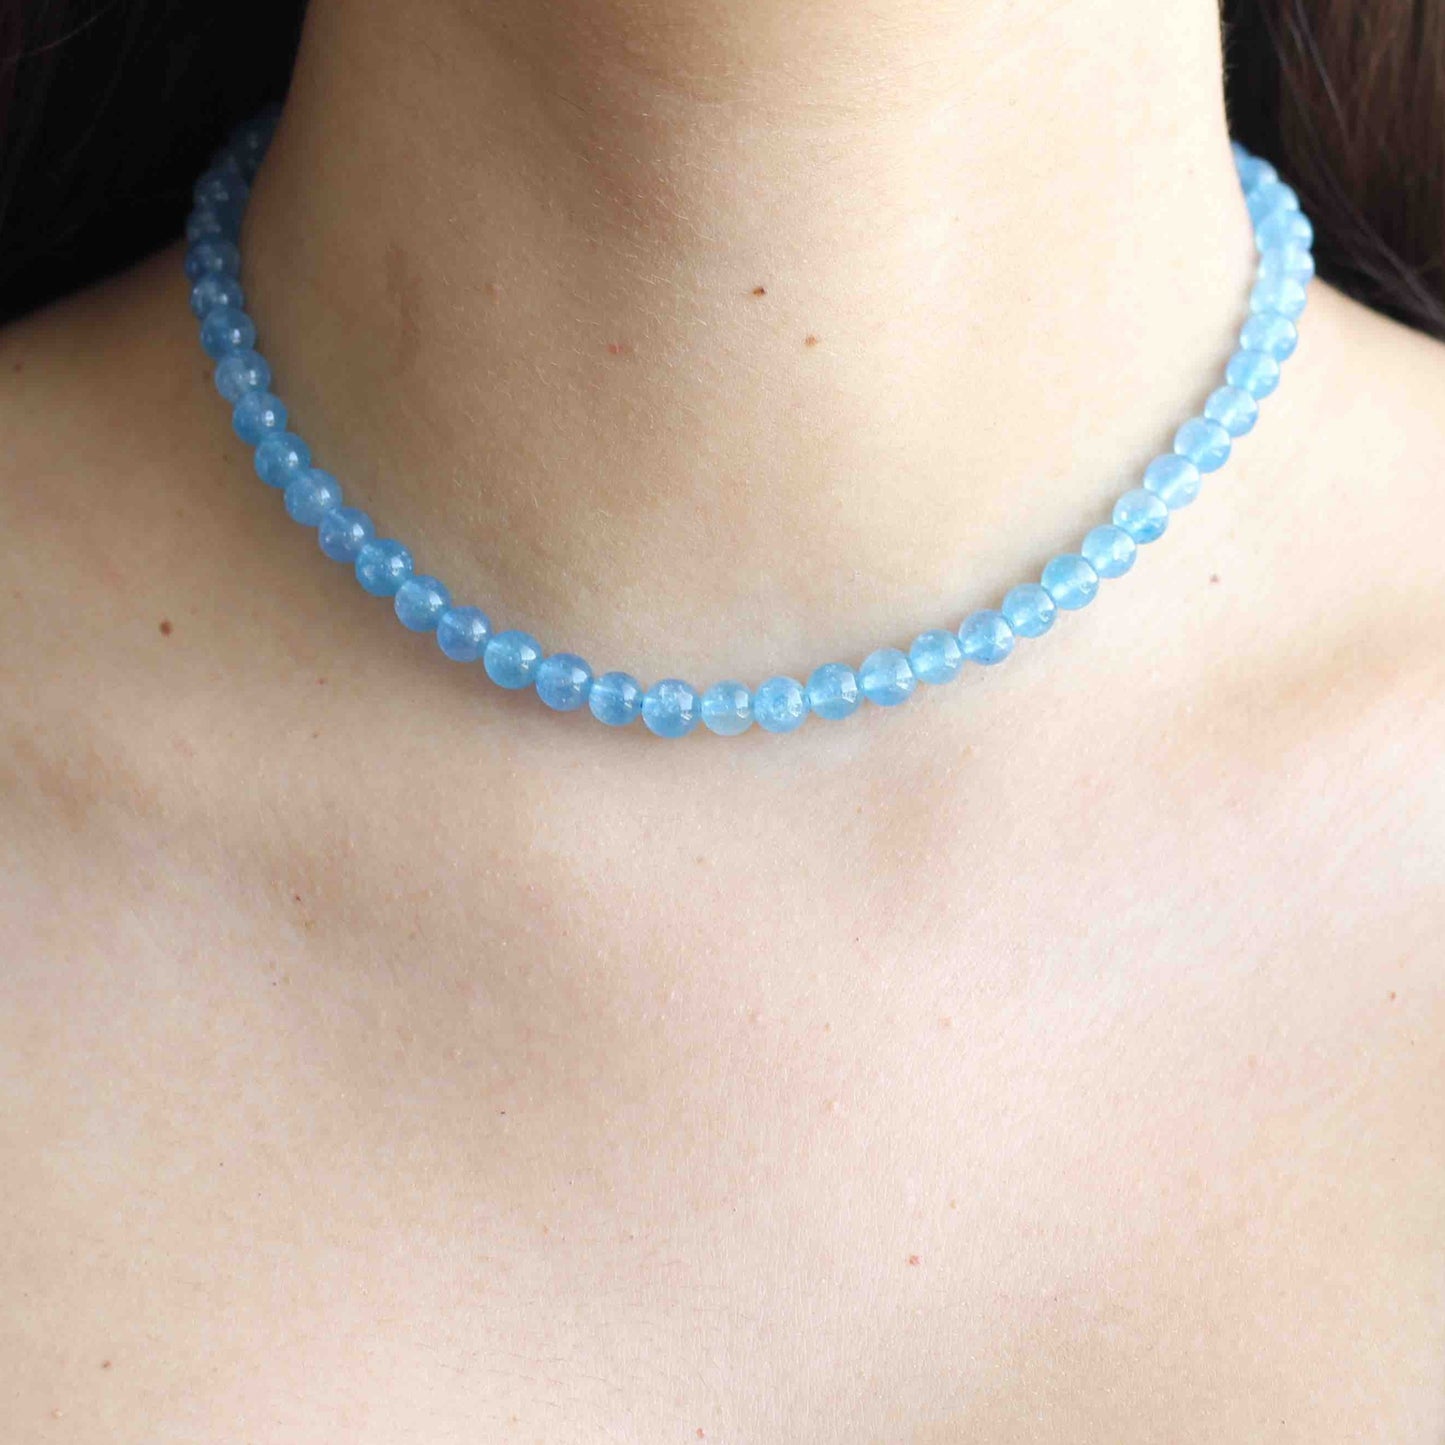 Handmade Minimalist Blue Quartz Beaded Gemstone Choker Necklace with Sterling Silver Closure